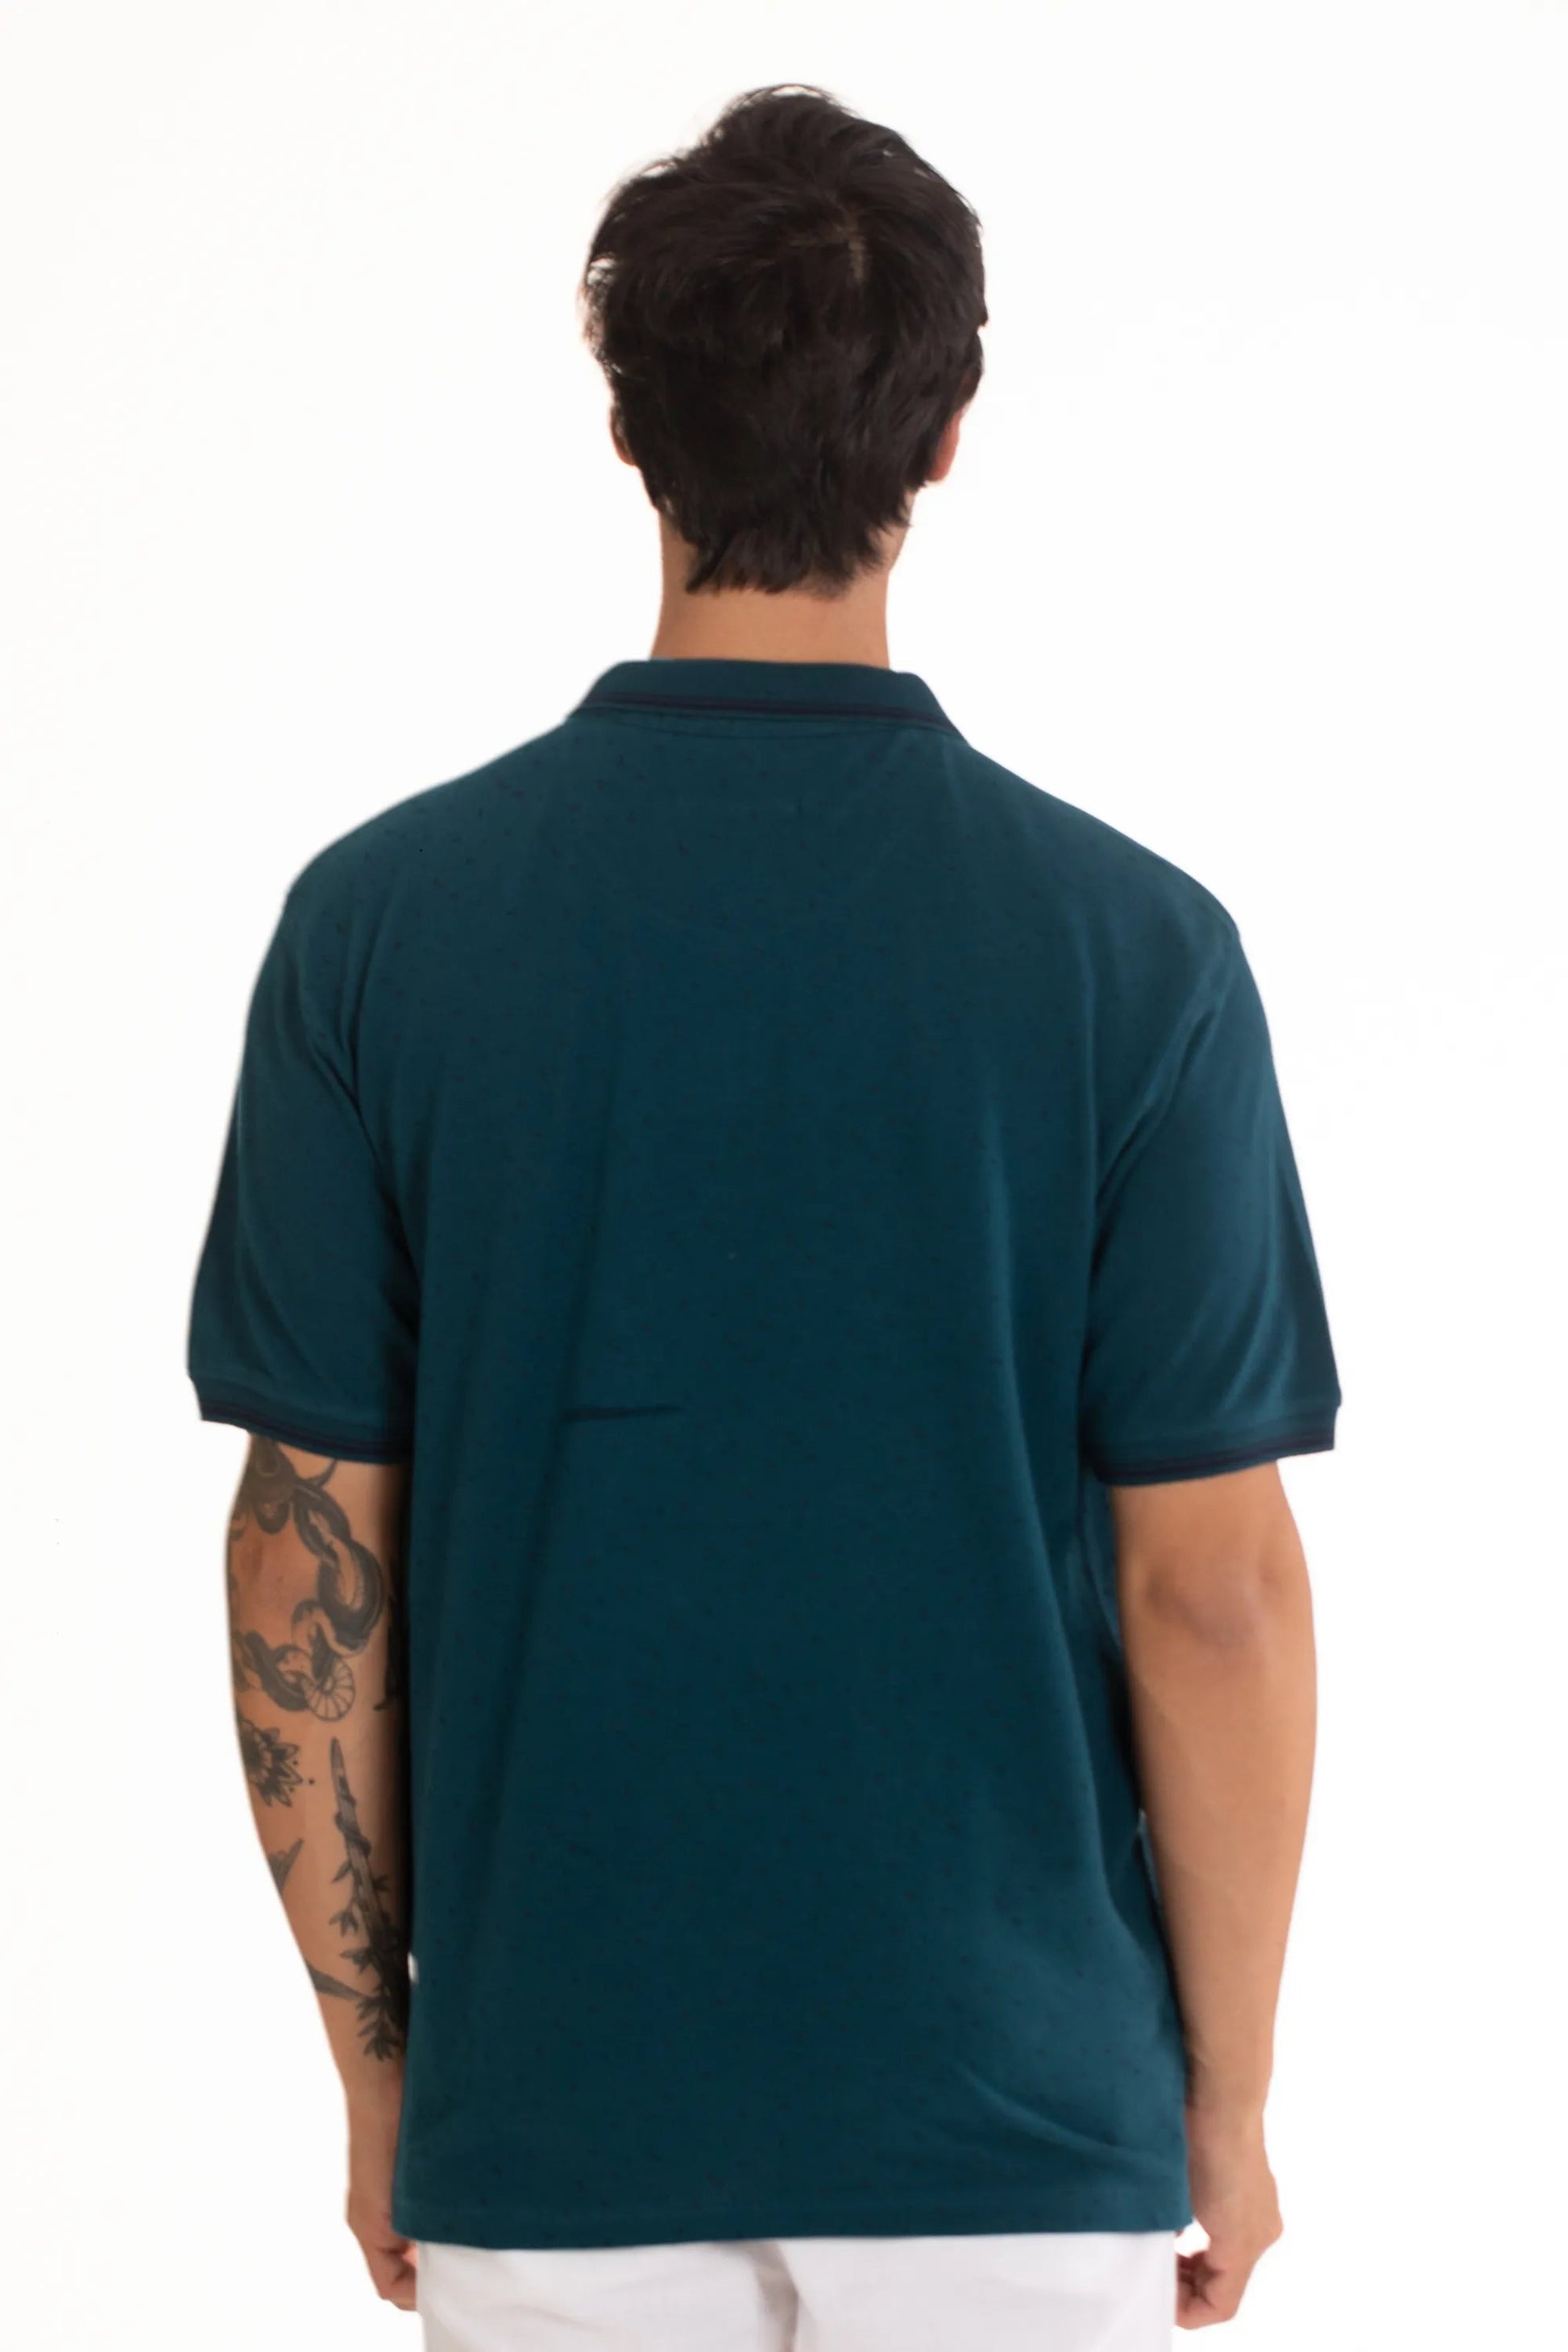 Teal Polo Men's Geo Printed T Shirt